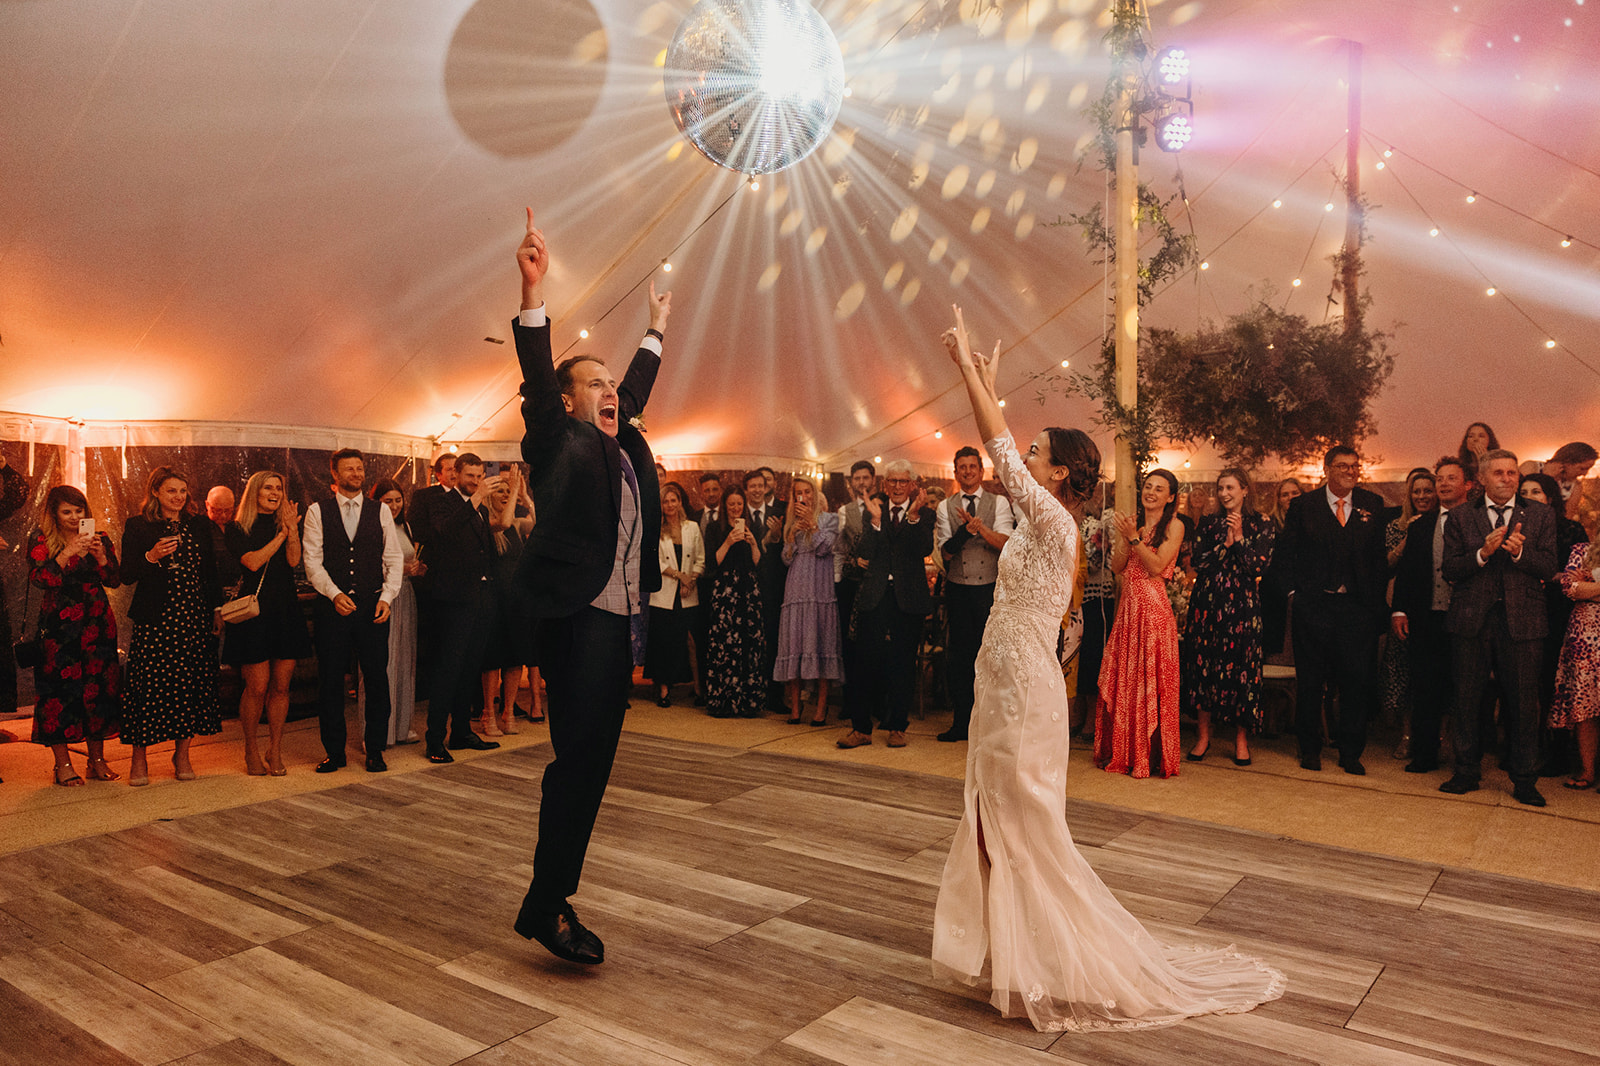 'Skilled documentary wedding photographer captures a couple's joyful dance under a disco ball in a tent